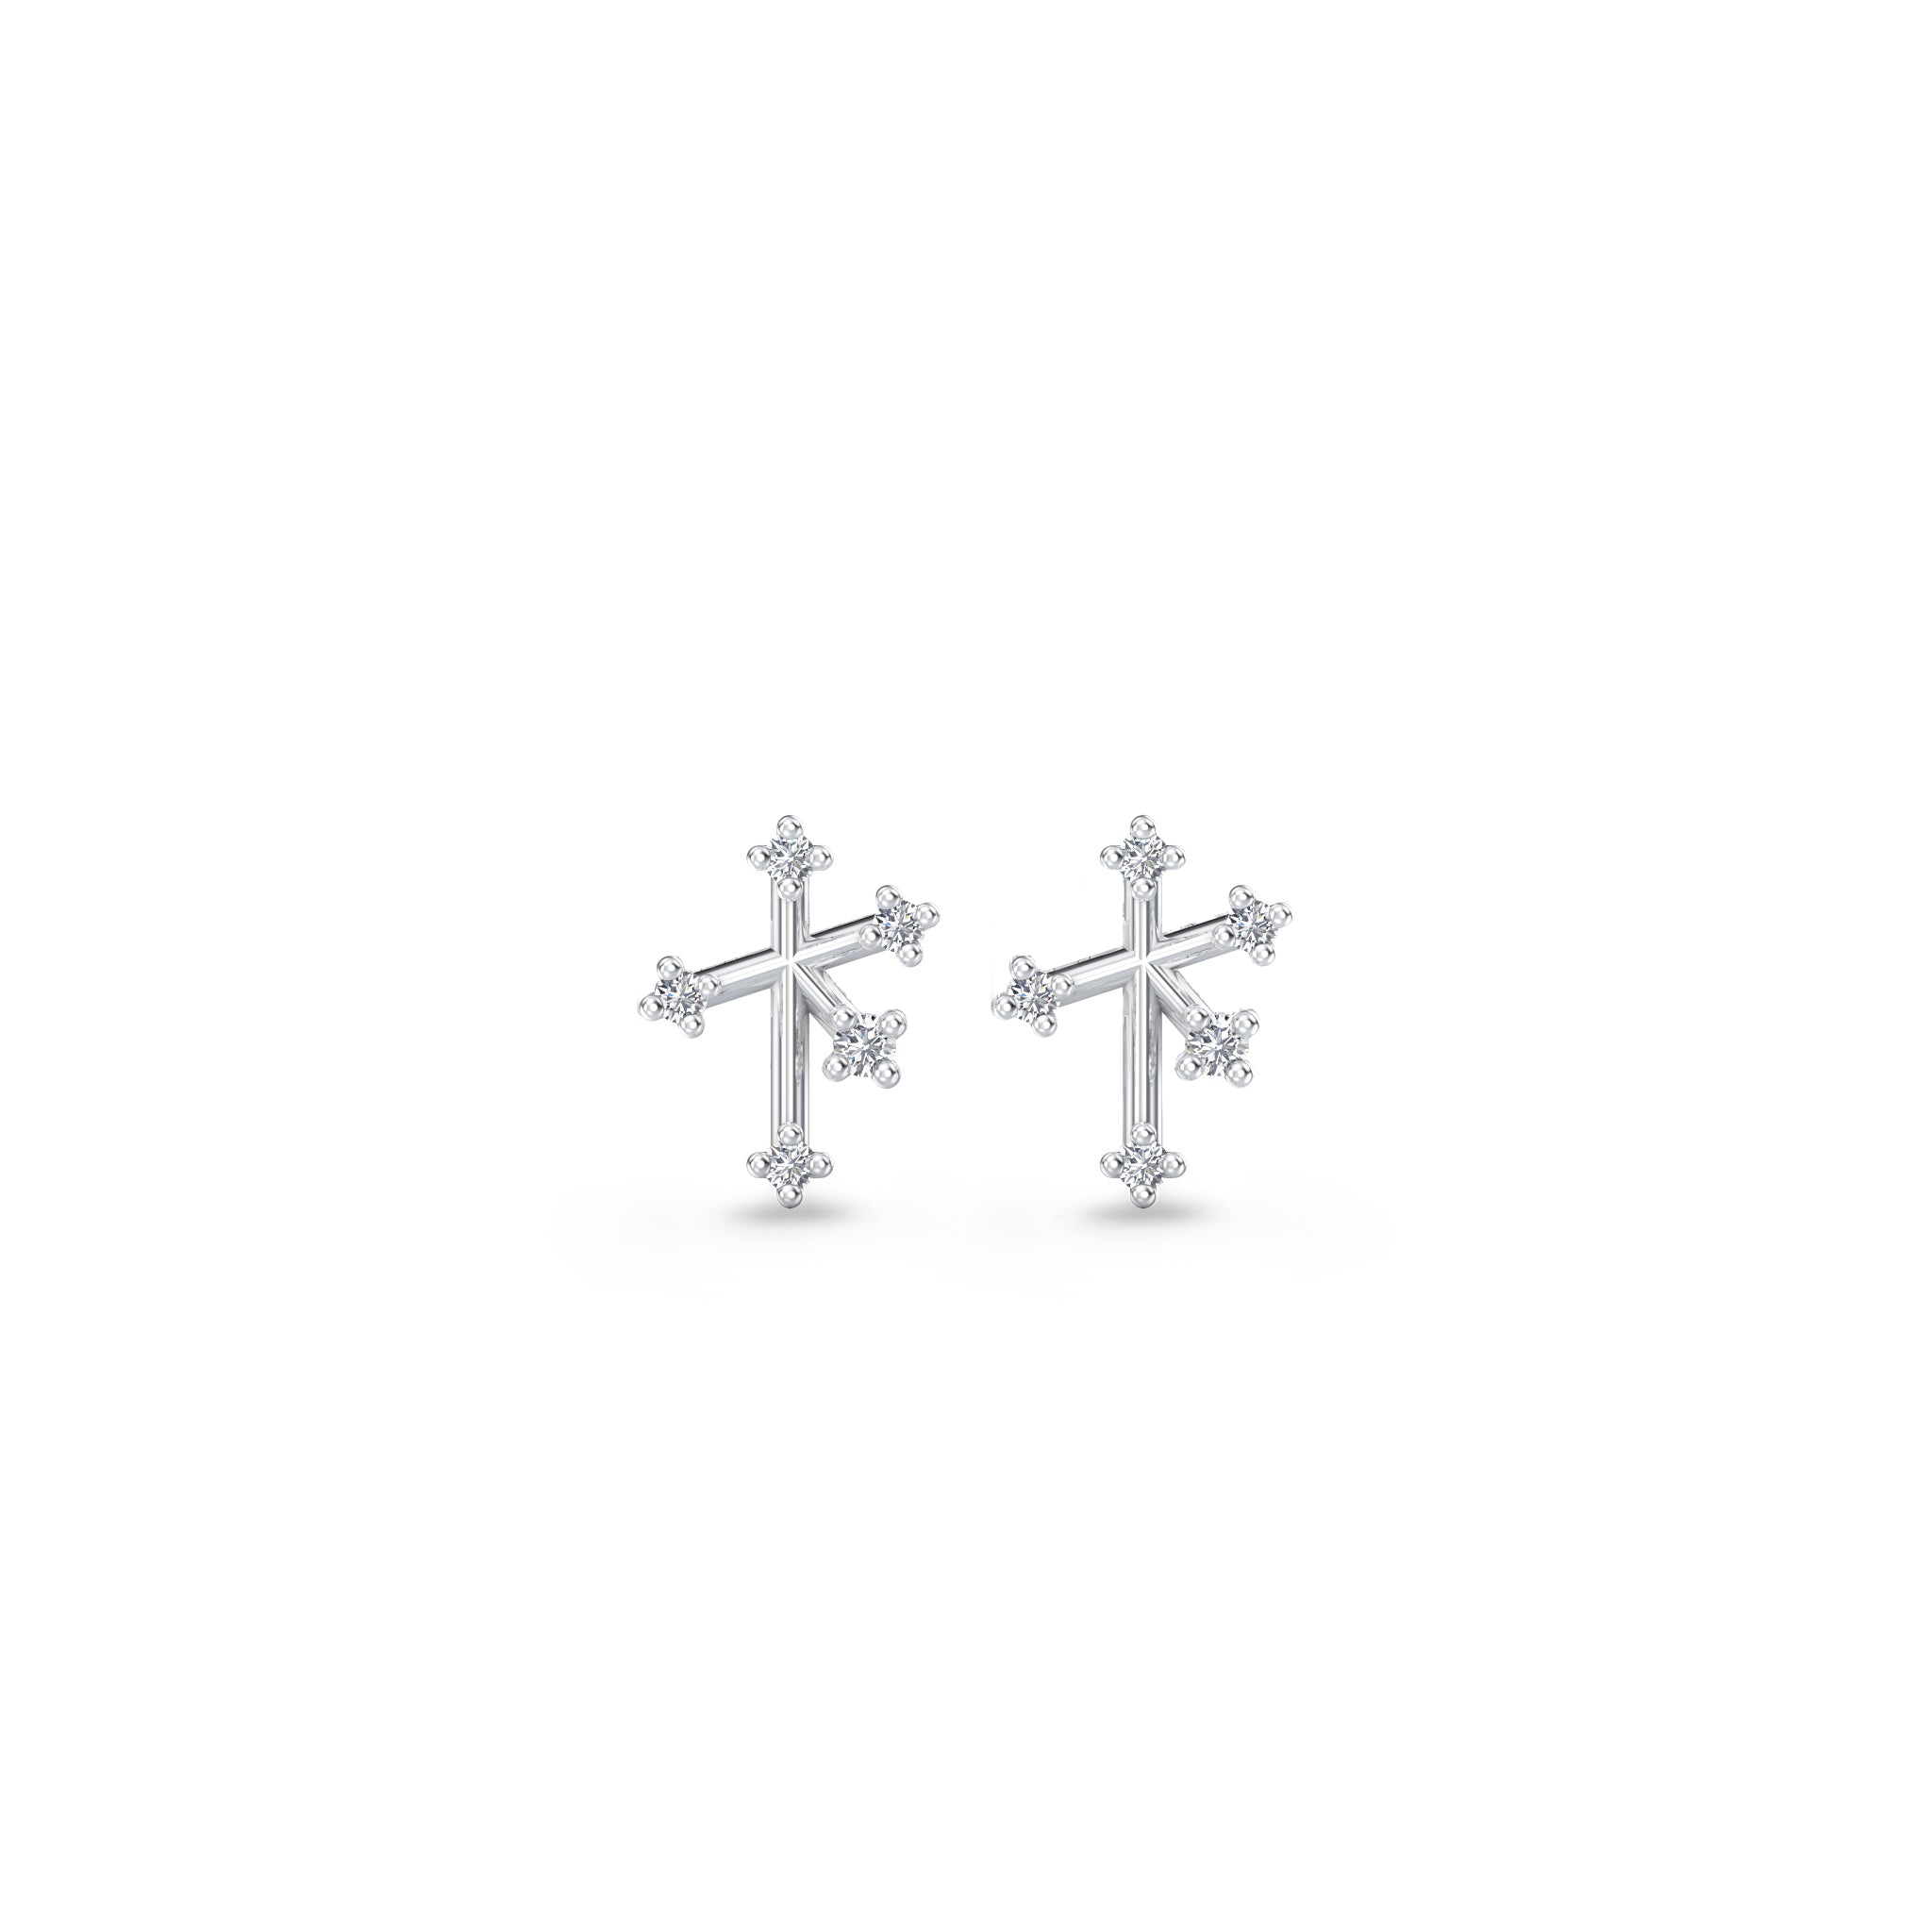 Southern Cross Diamond Stud Earrings | 14K White Gold - SHIMANSKY.CO.ZA